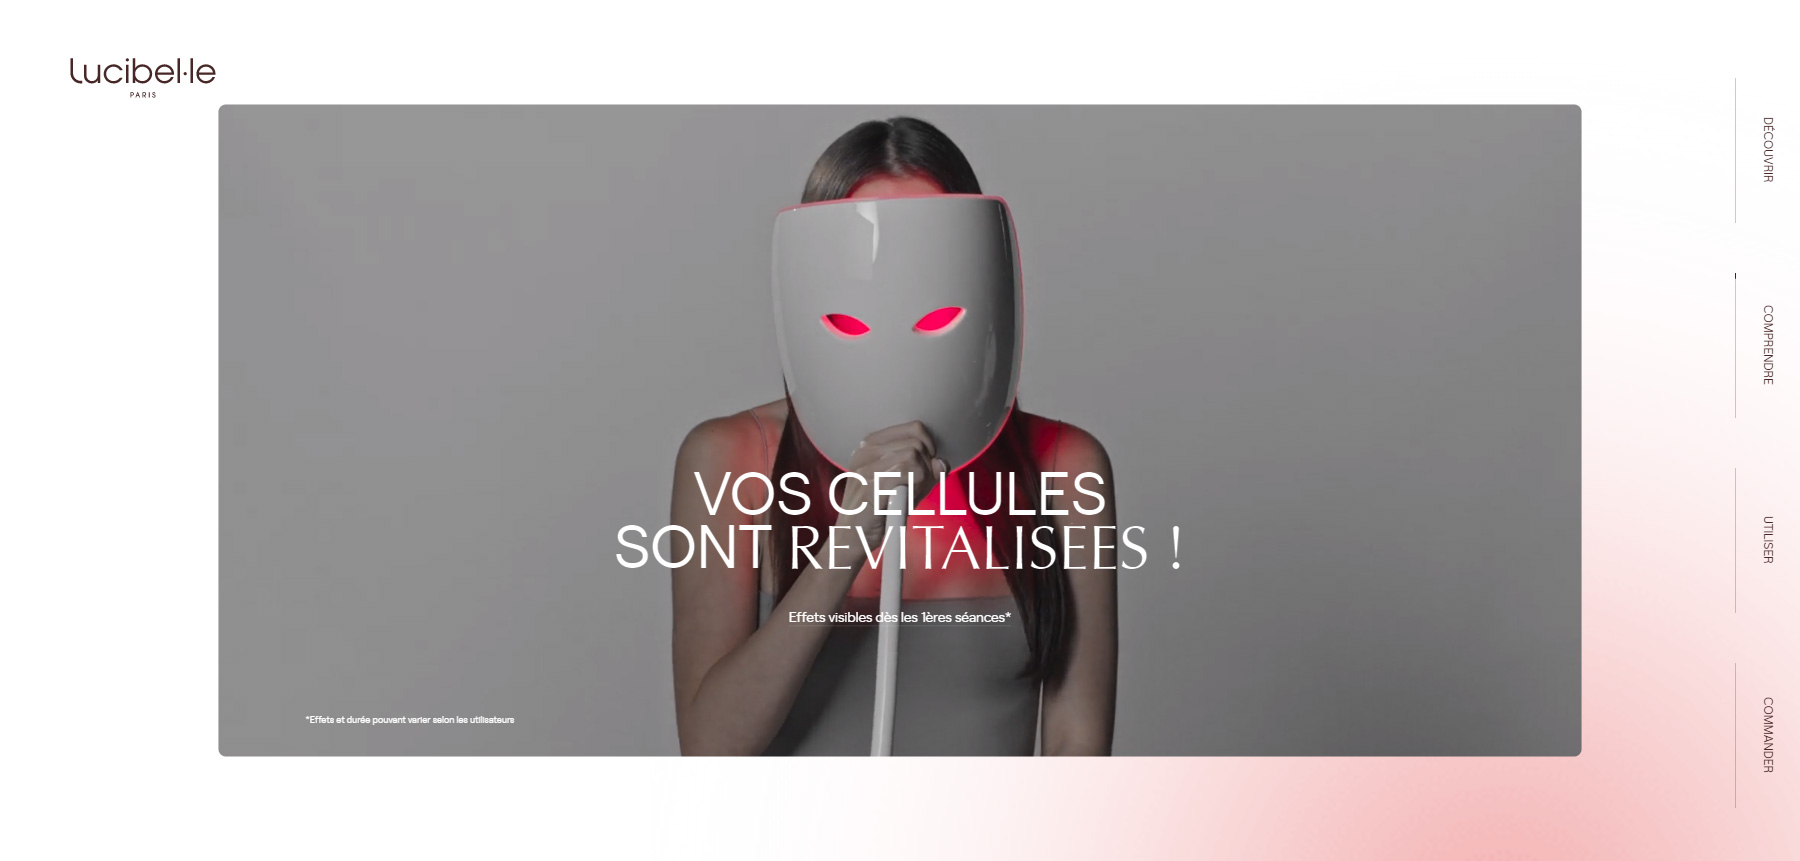 Lucibelle Paris - Website of the Day